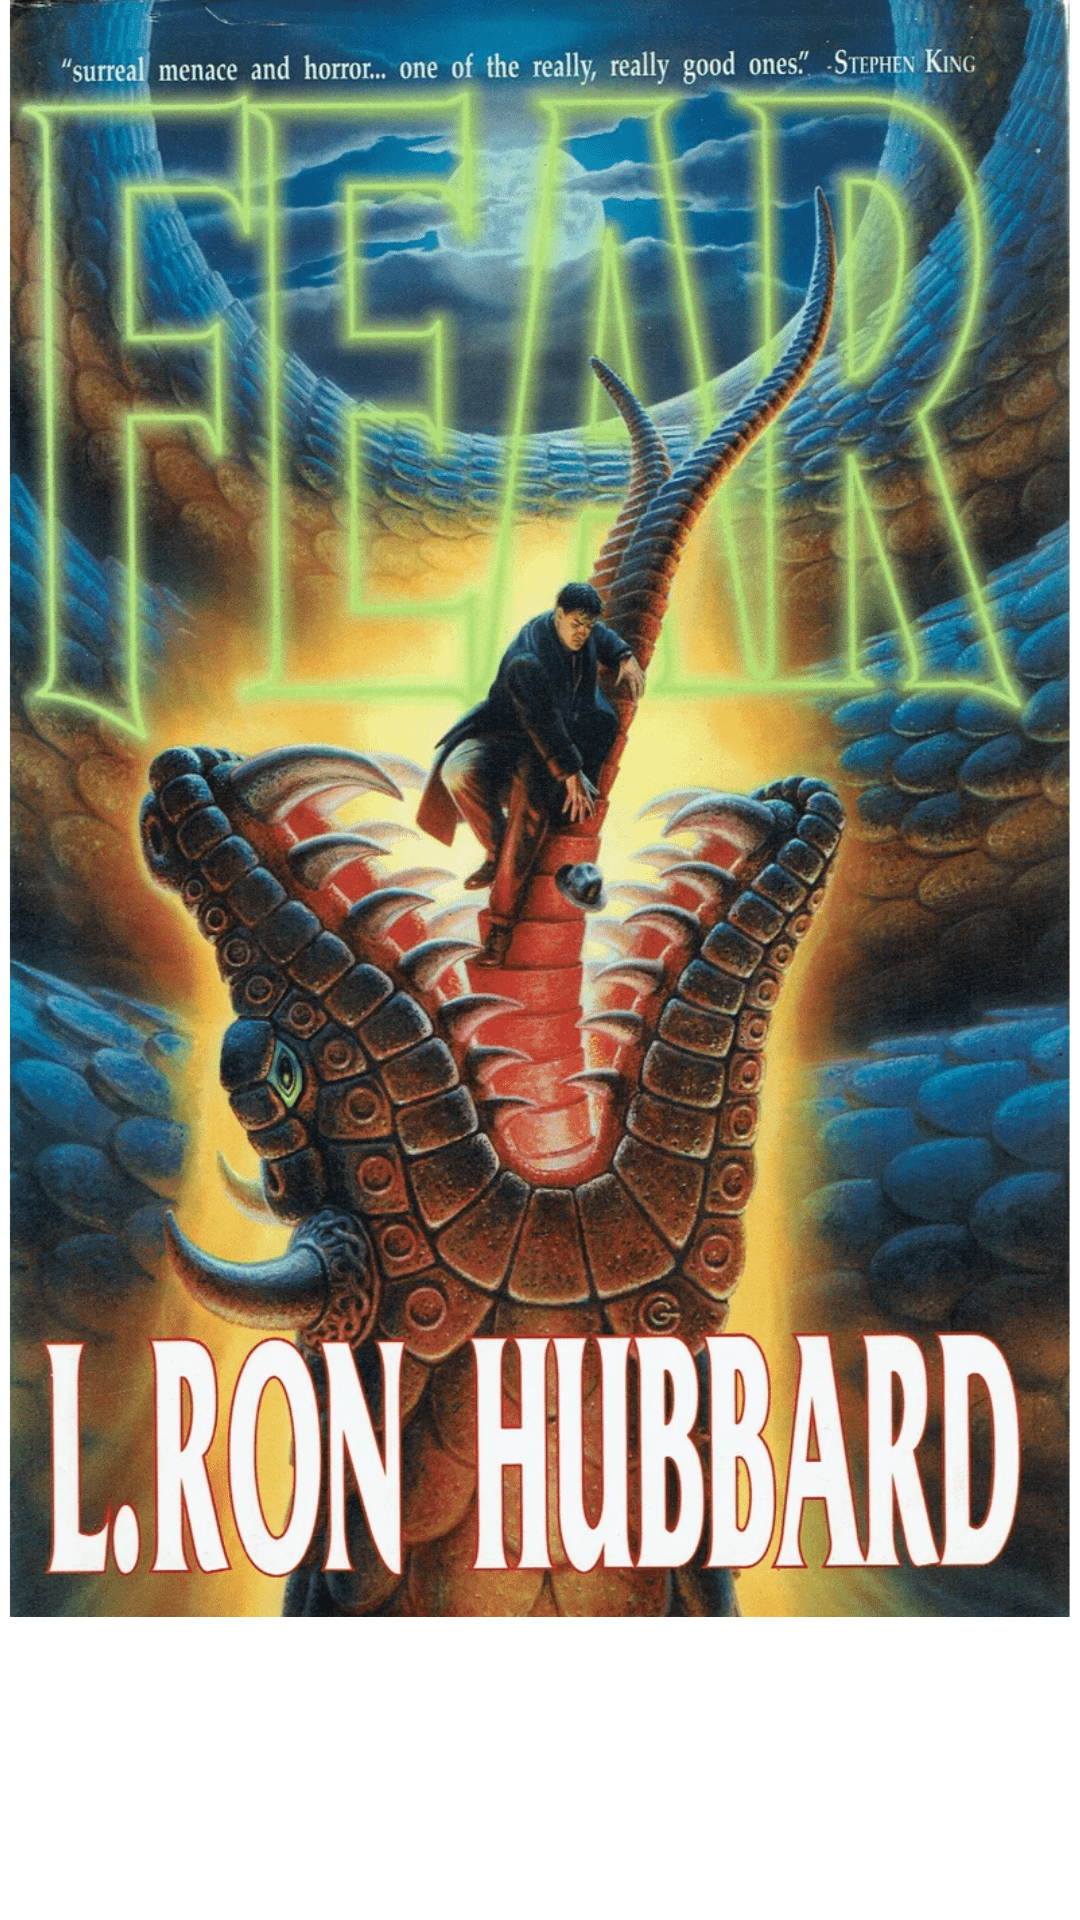 List of L. Ron Hubbard Fiction Books